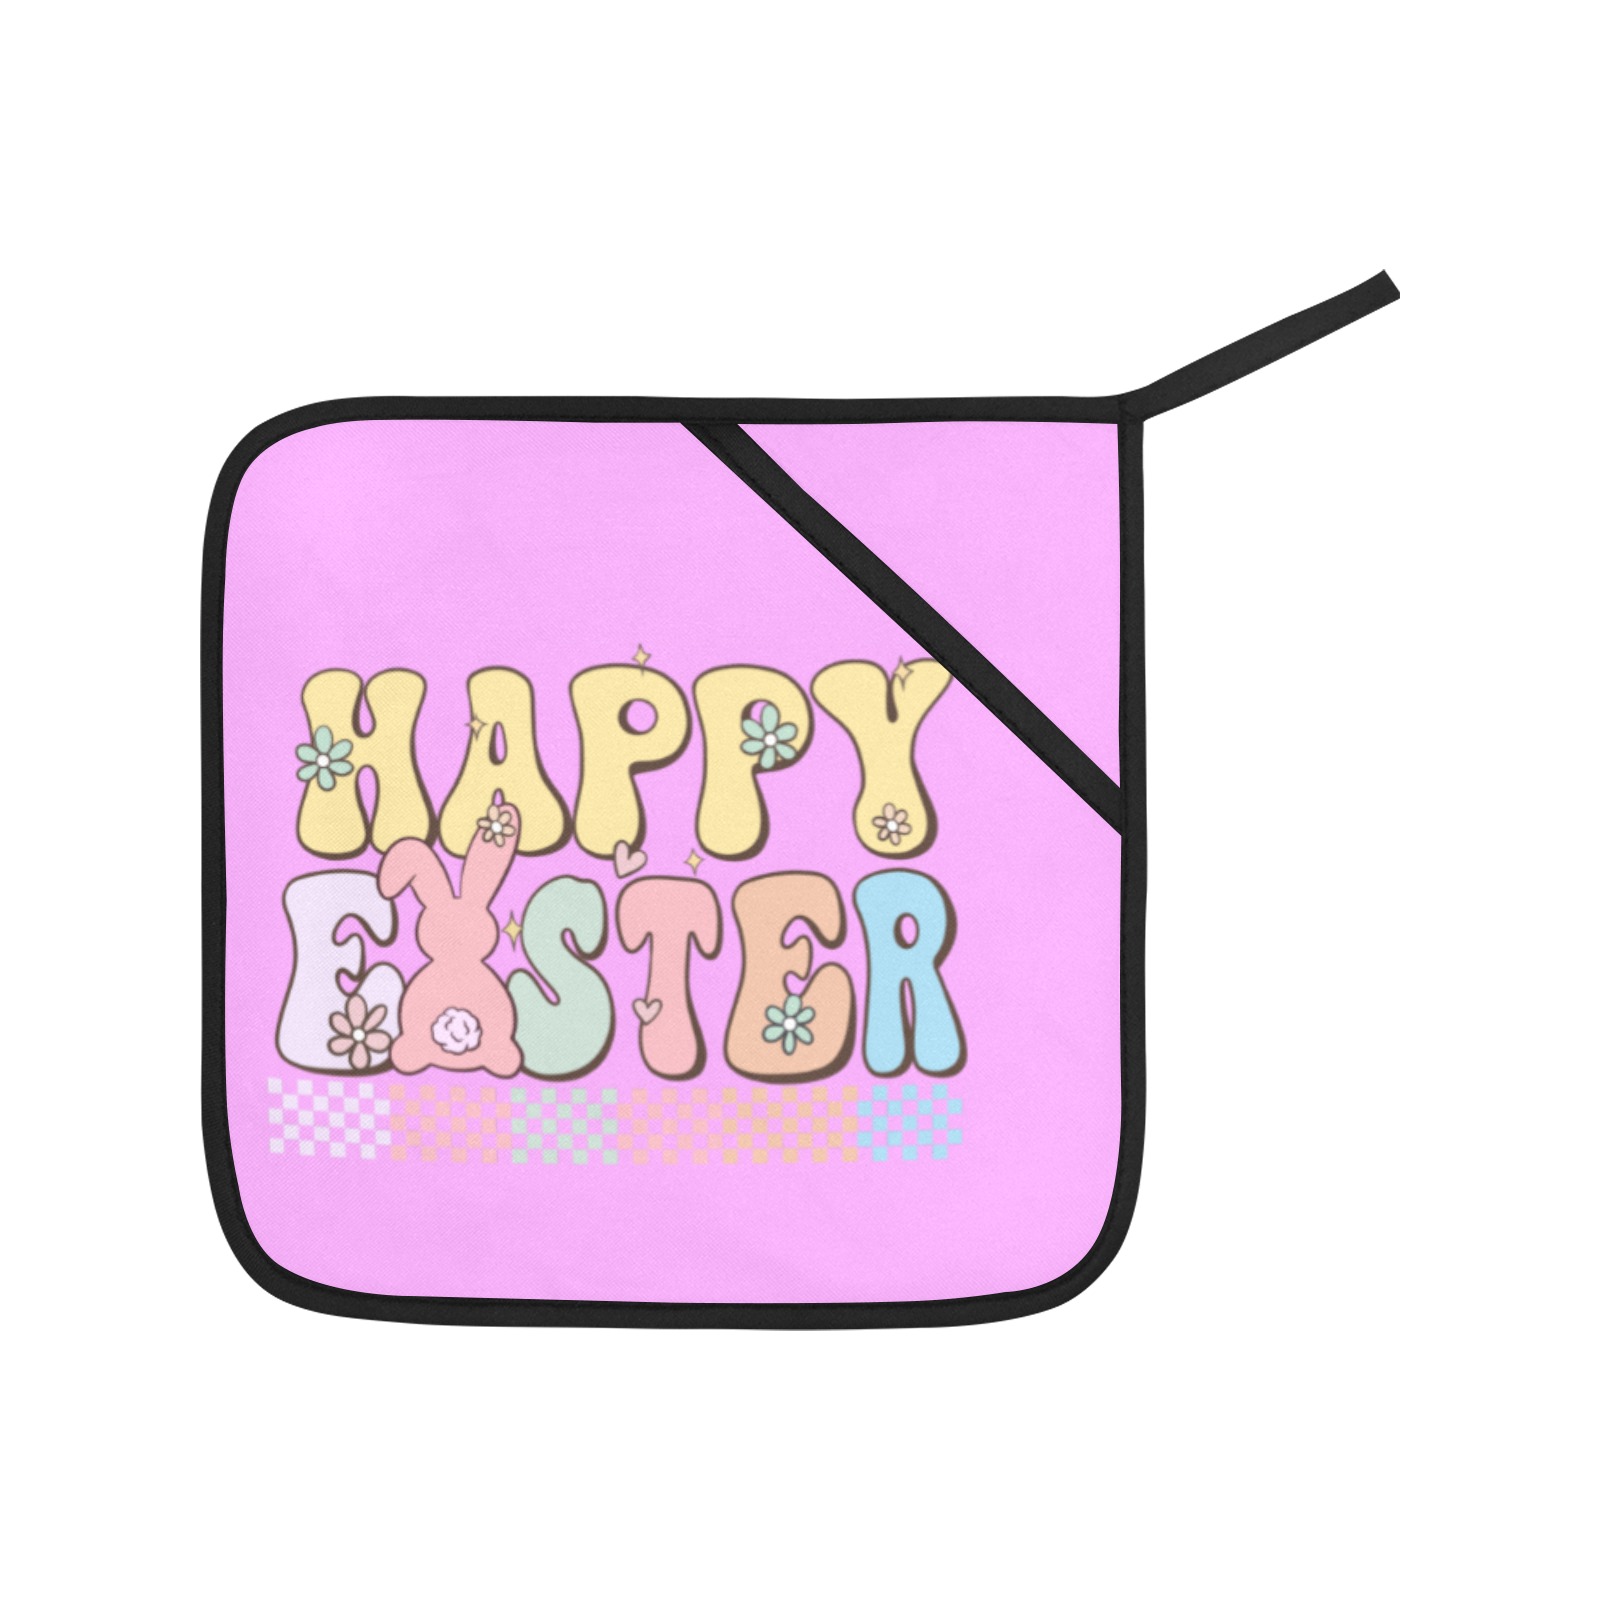 Happy Easter Beagle Oven Mitt & Pot Holder